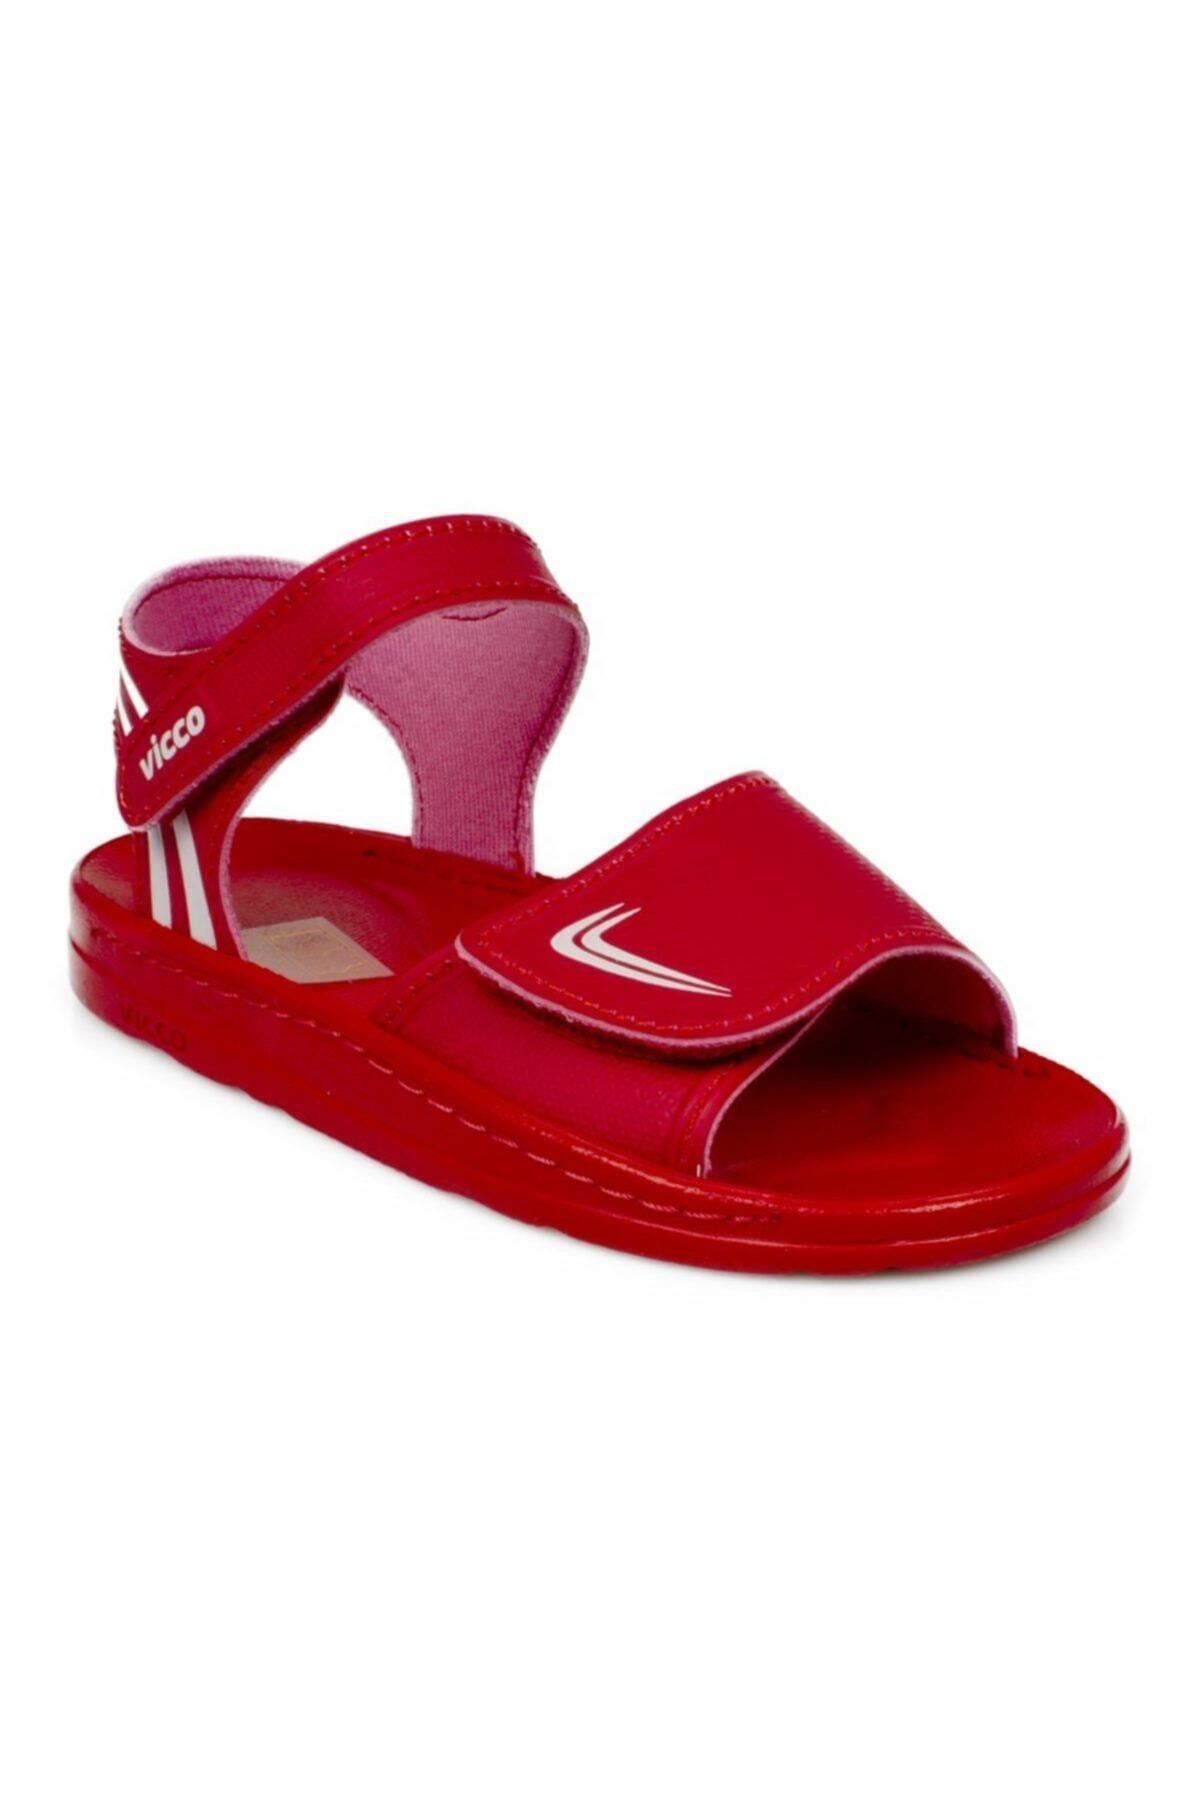 Vicco Kız Çocuk Kırmızı Patik Sandalet 332.p20y.301-03